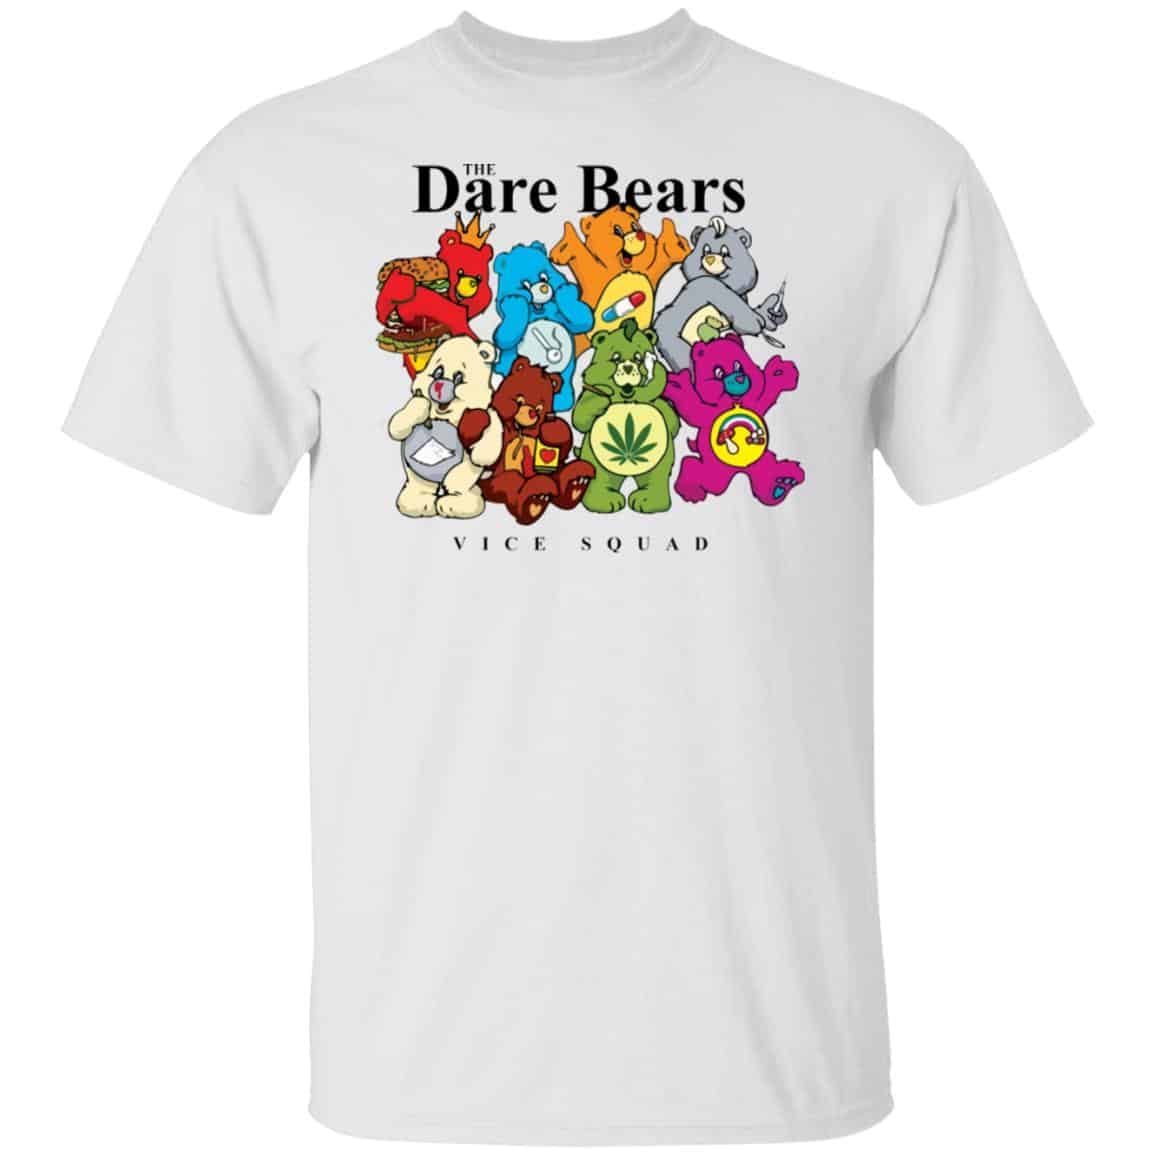 The Dare Bears Vice Squad shirt